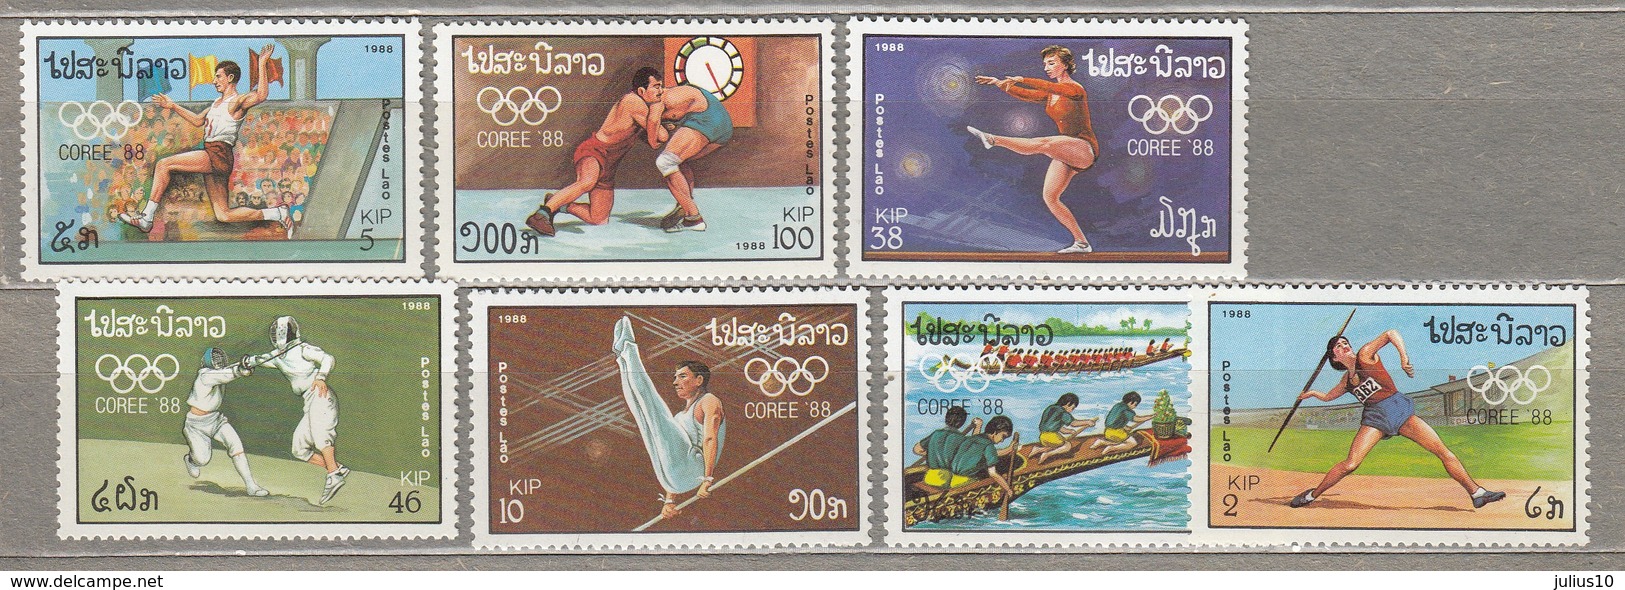 LAOS 1988 Summer Olympic Games Seoul MNH (**) Mi 1067-1073 #24760 - Laos